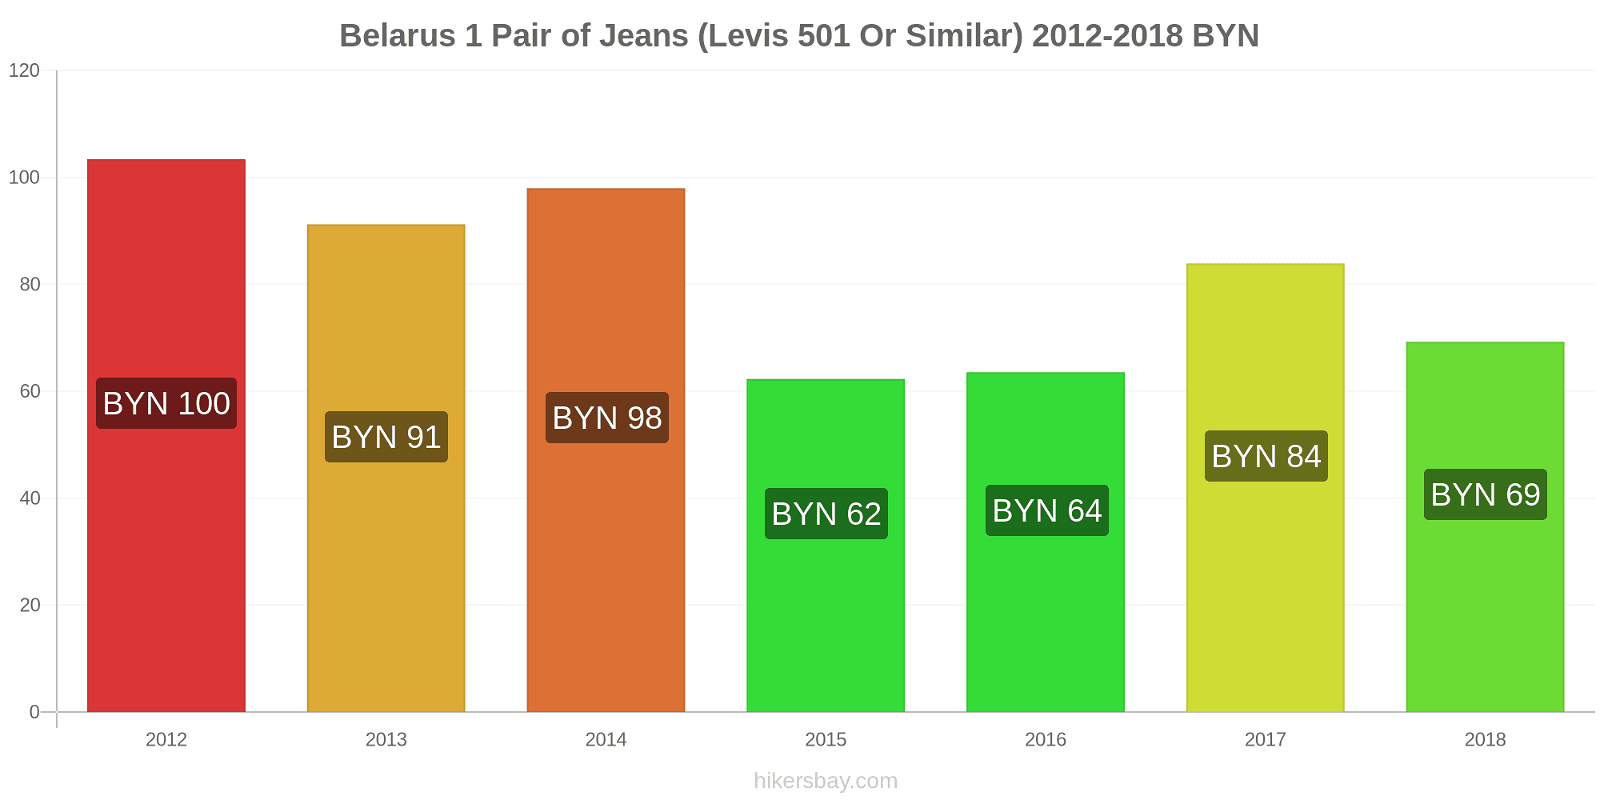 Belarus price changes 1 pair of jeans (Levis 501 or similar) hikersbay.com